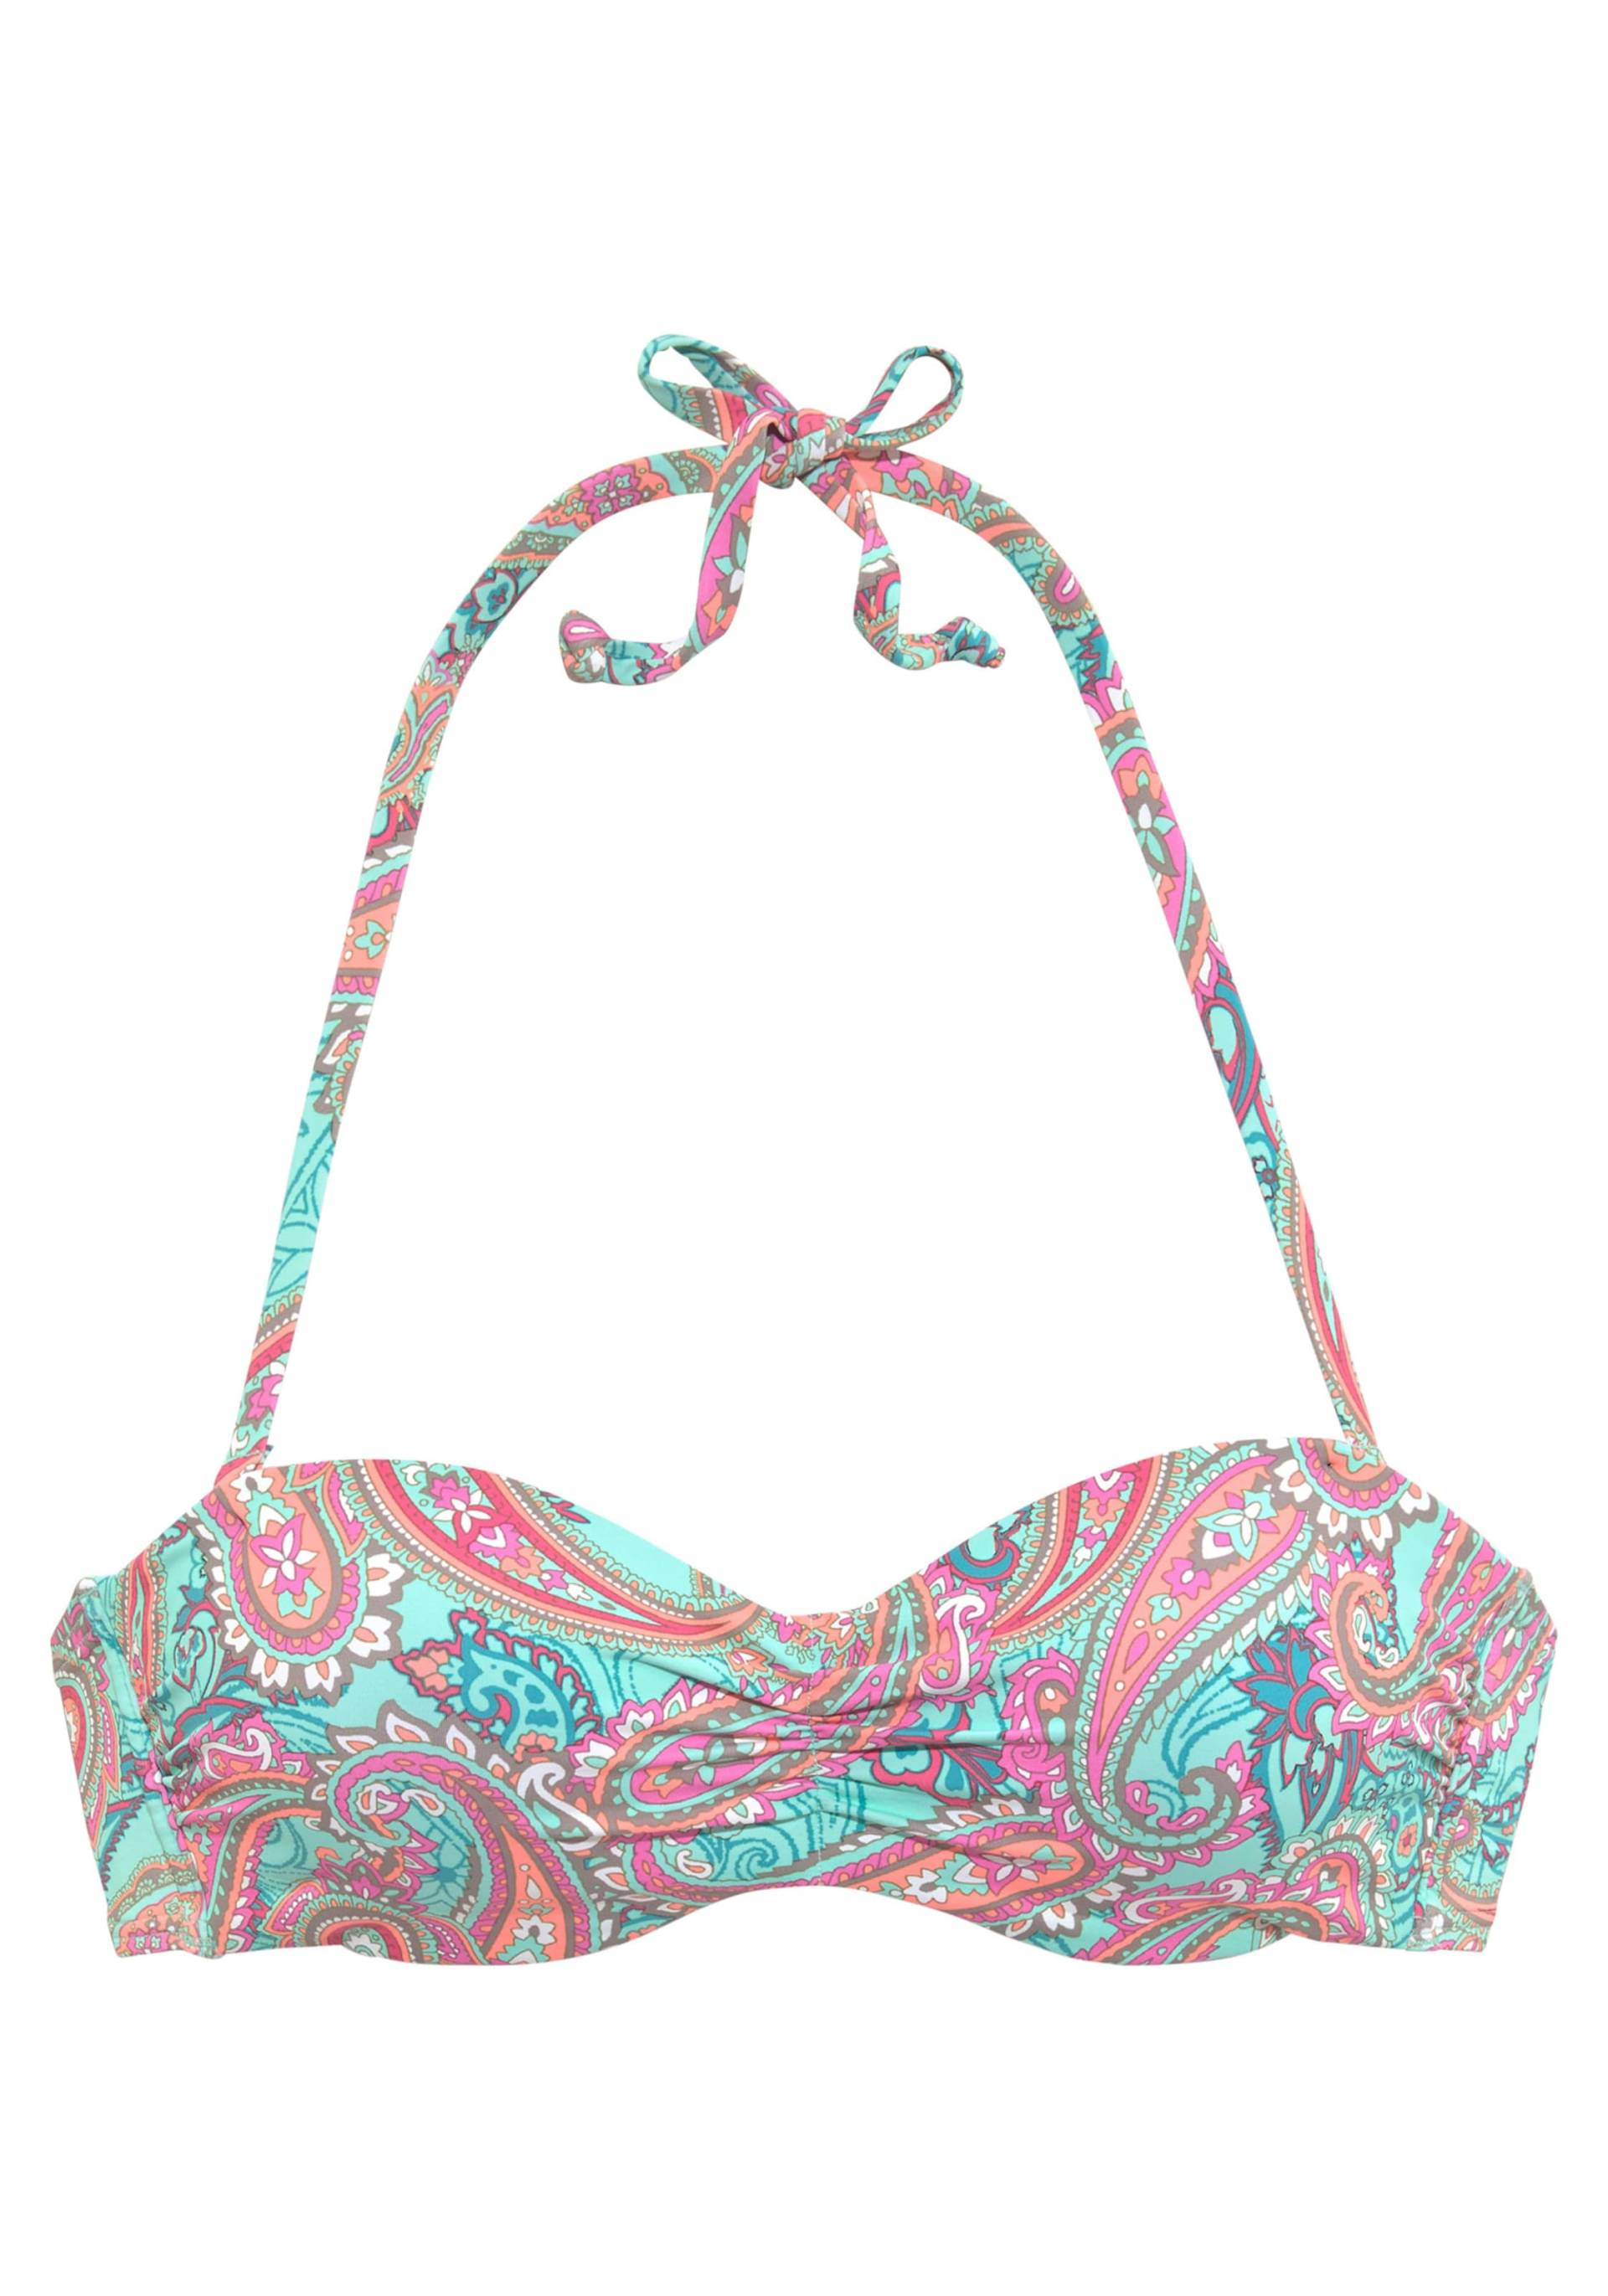 Bügel-Bandeau-Bikini-Top in mint-bedruckt von Venice Beach